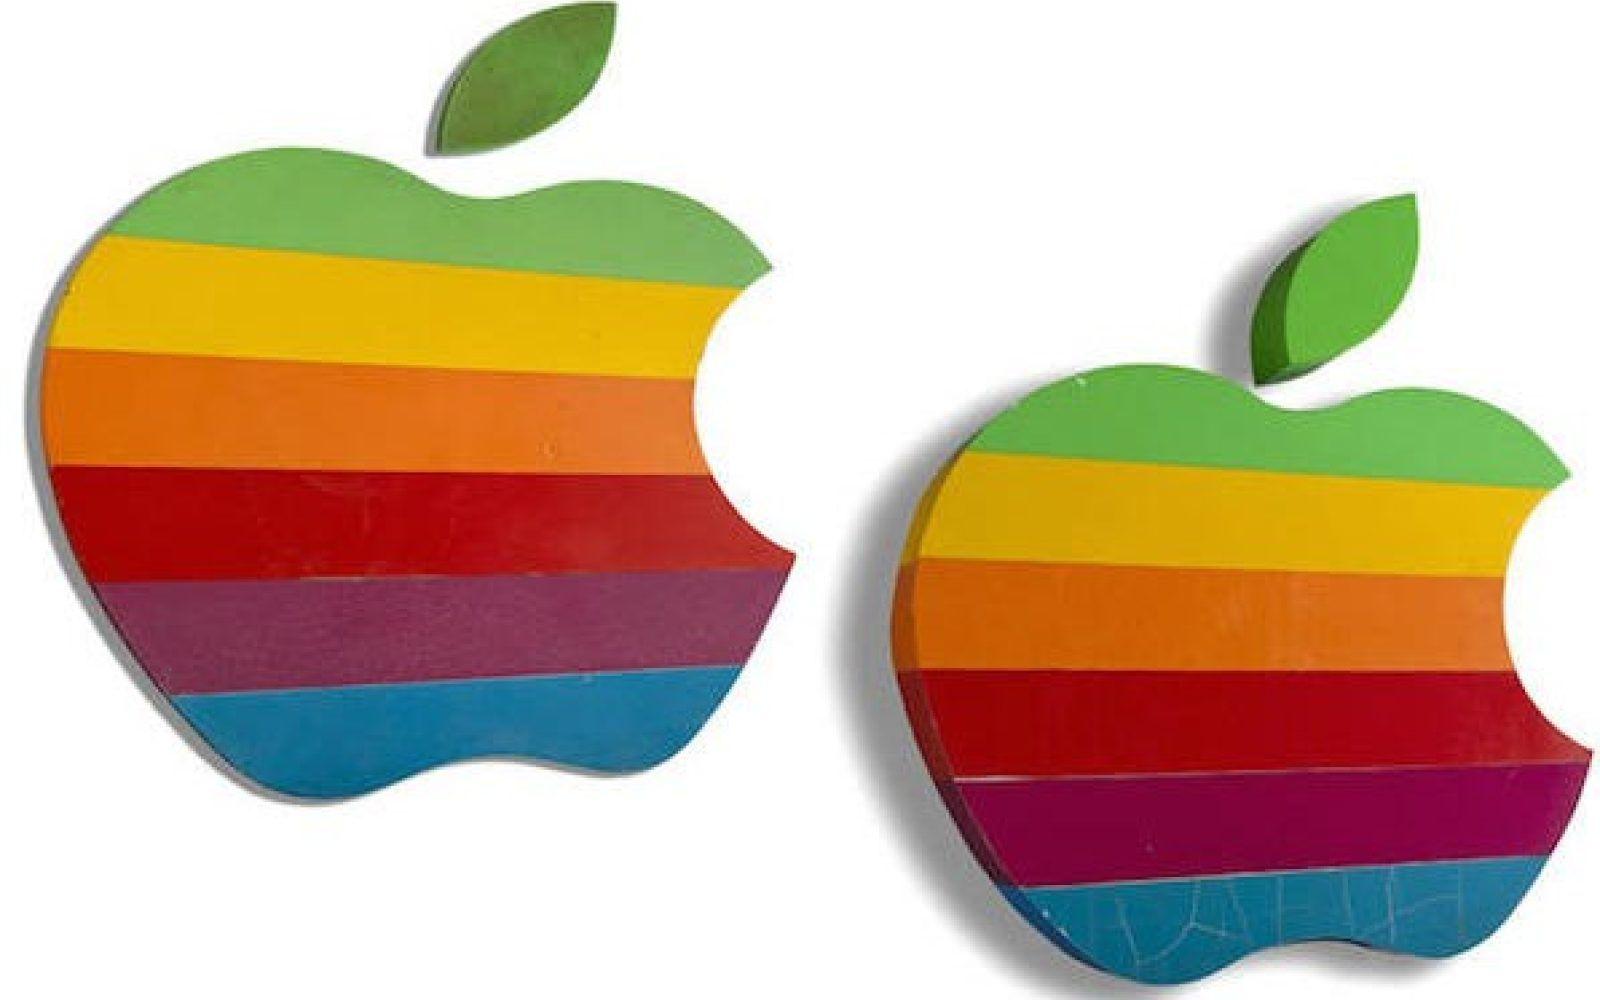 Old Macintosh Logo - Fancy a piece of Apple history? Apple's original rainbow logo signs ...